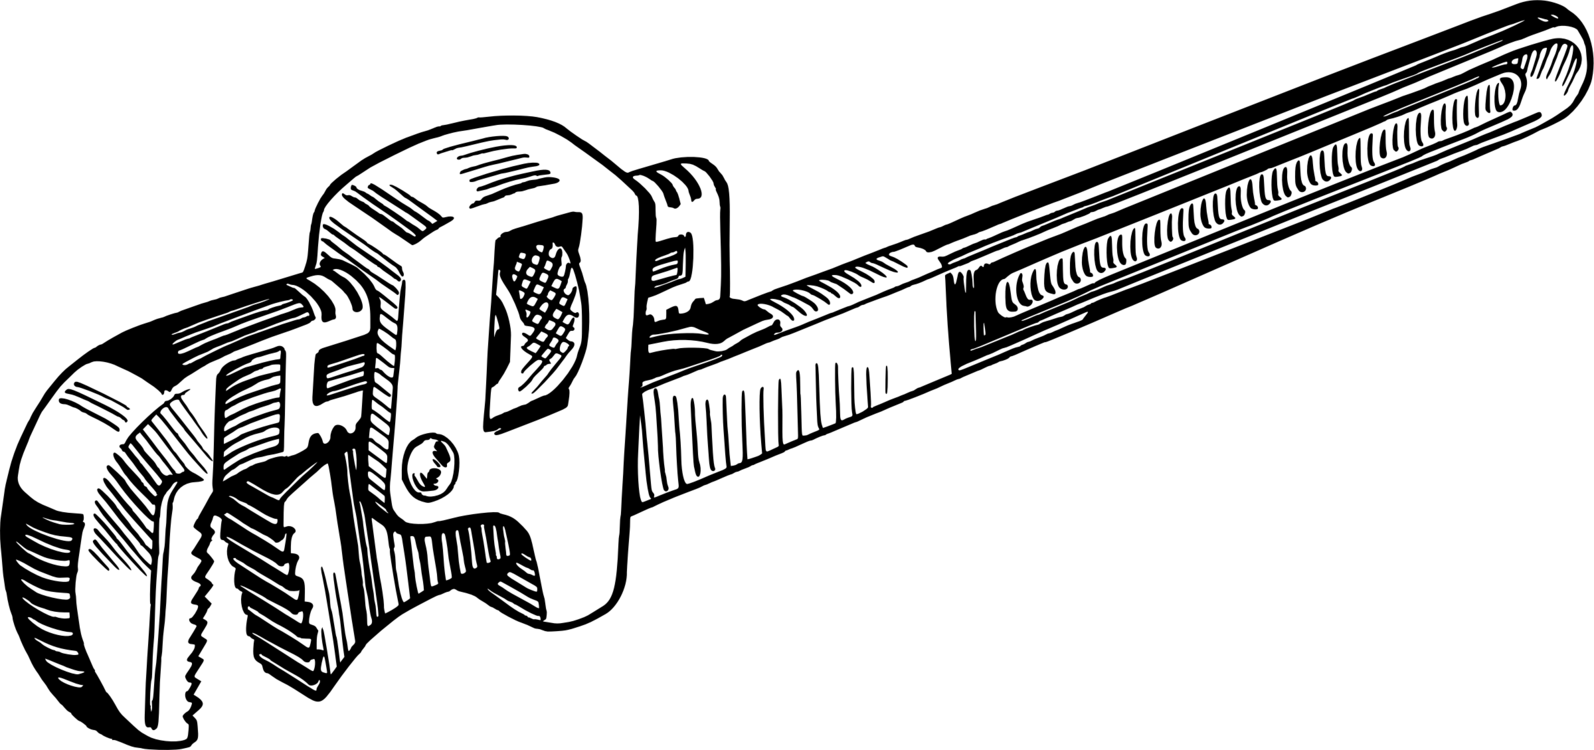 Logo,Weapon,Hardware Accessory